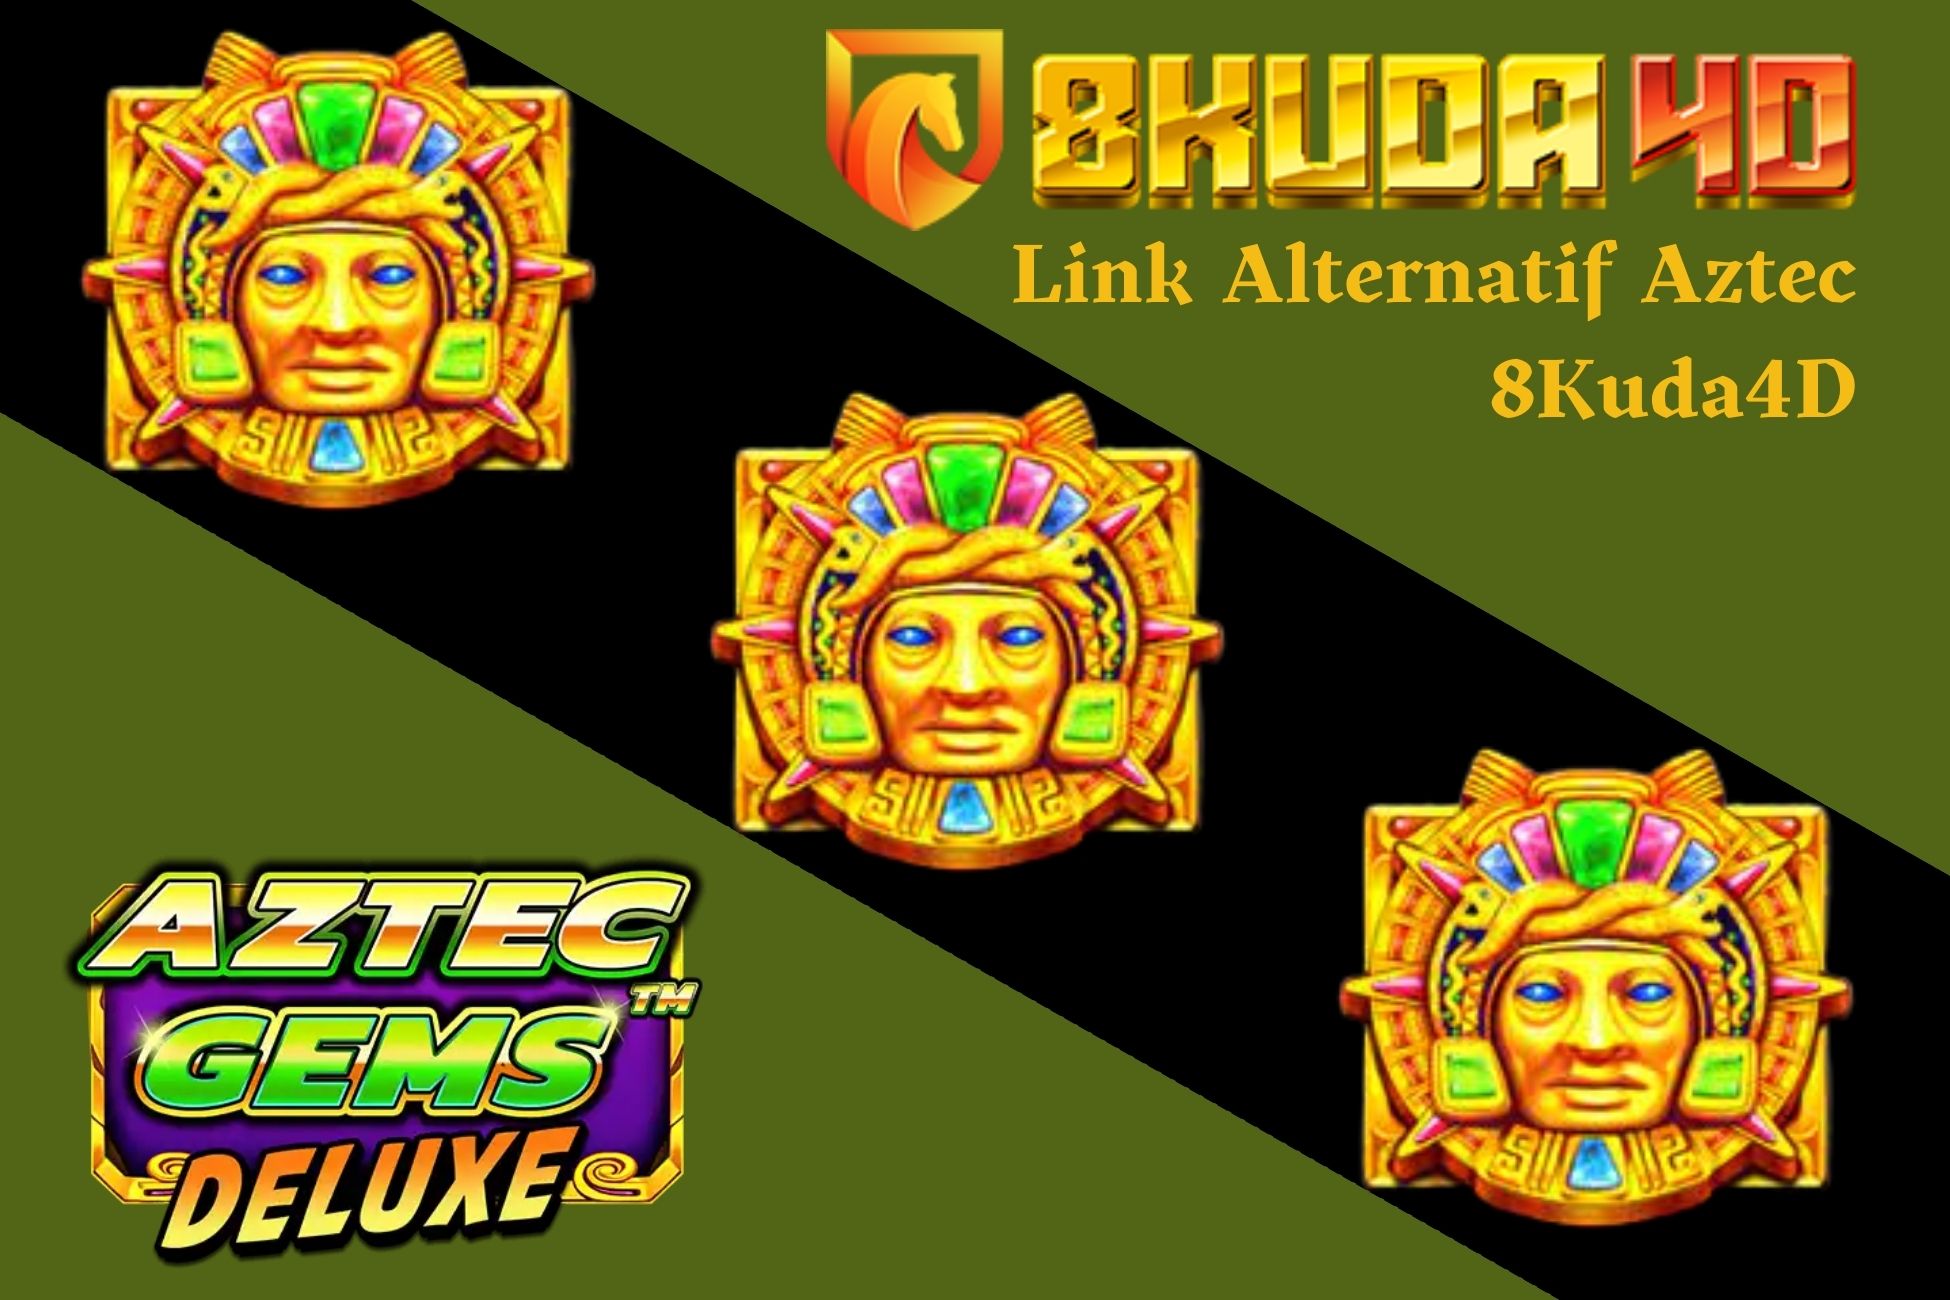 Link Alternatif Aztec 8Kuda4D